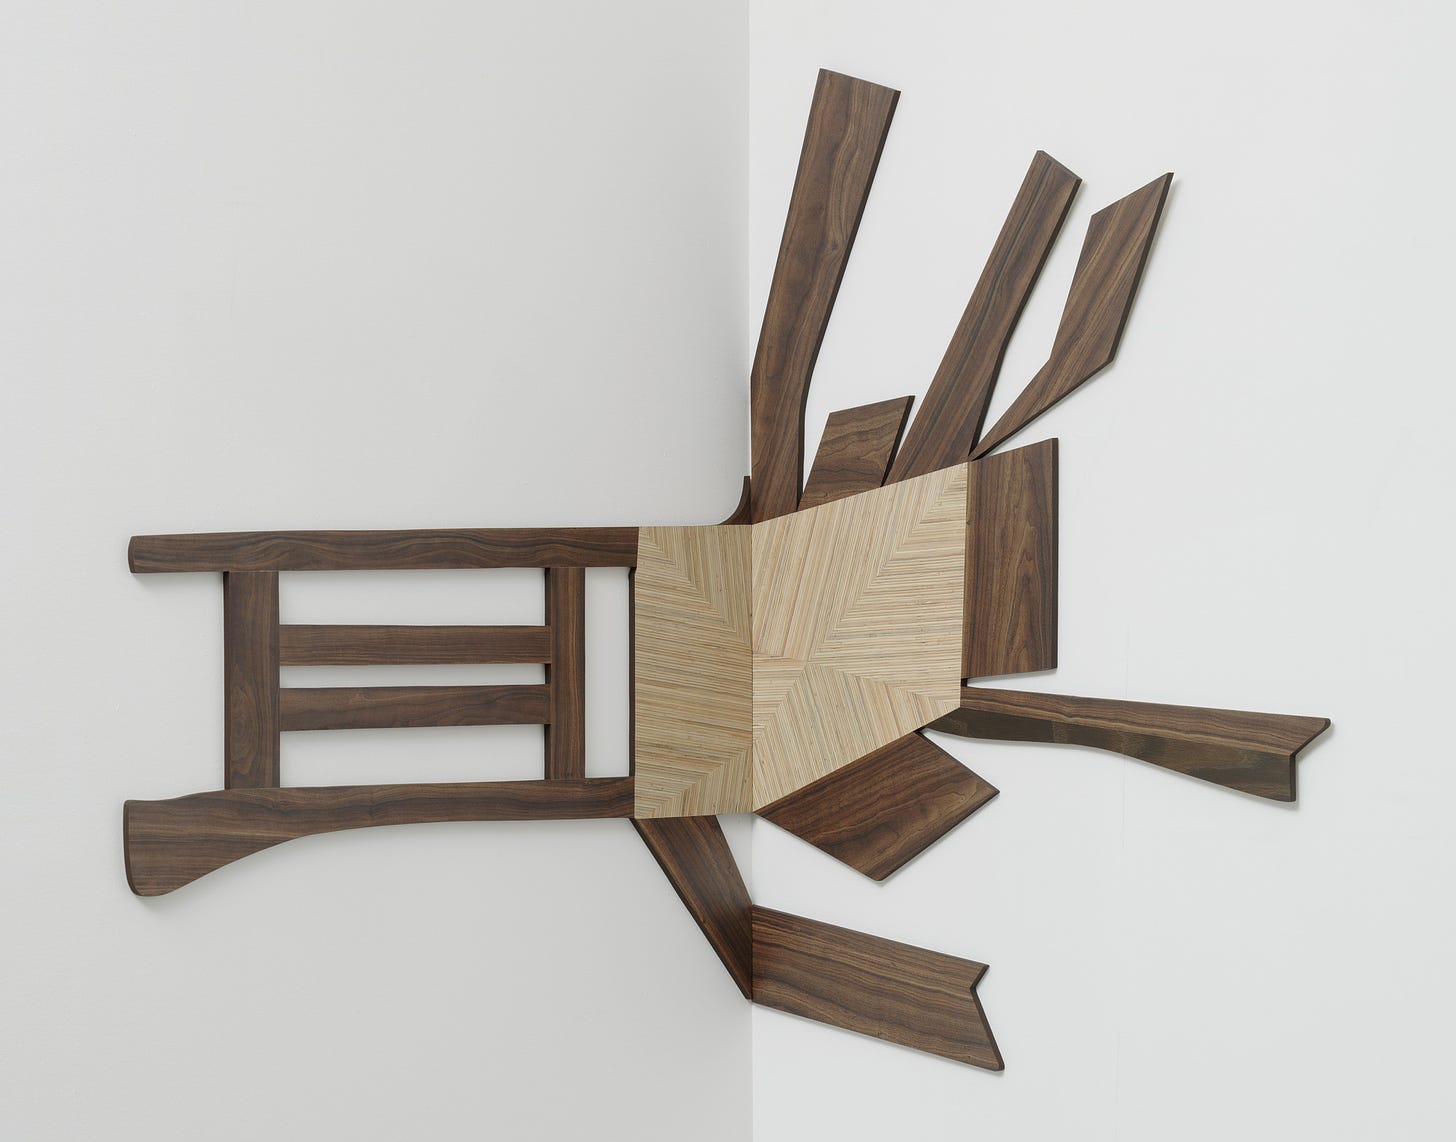 Richard Artschwager. Splatter Chair I. 1992 | MoMA